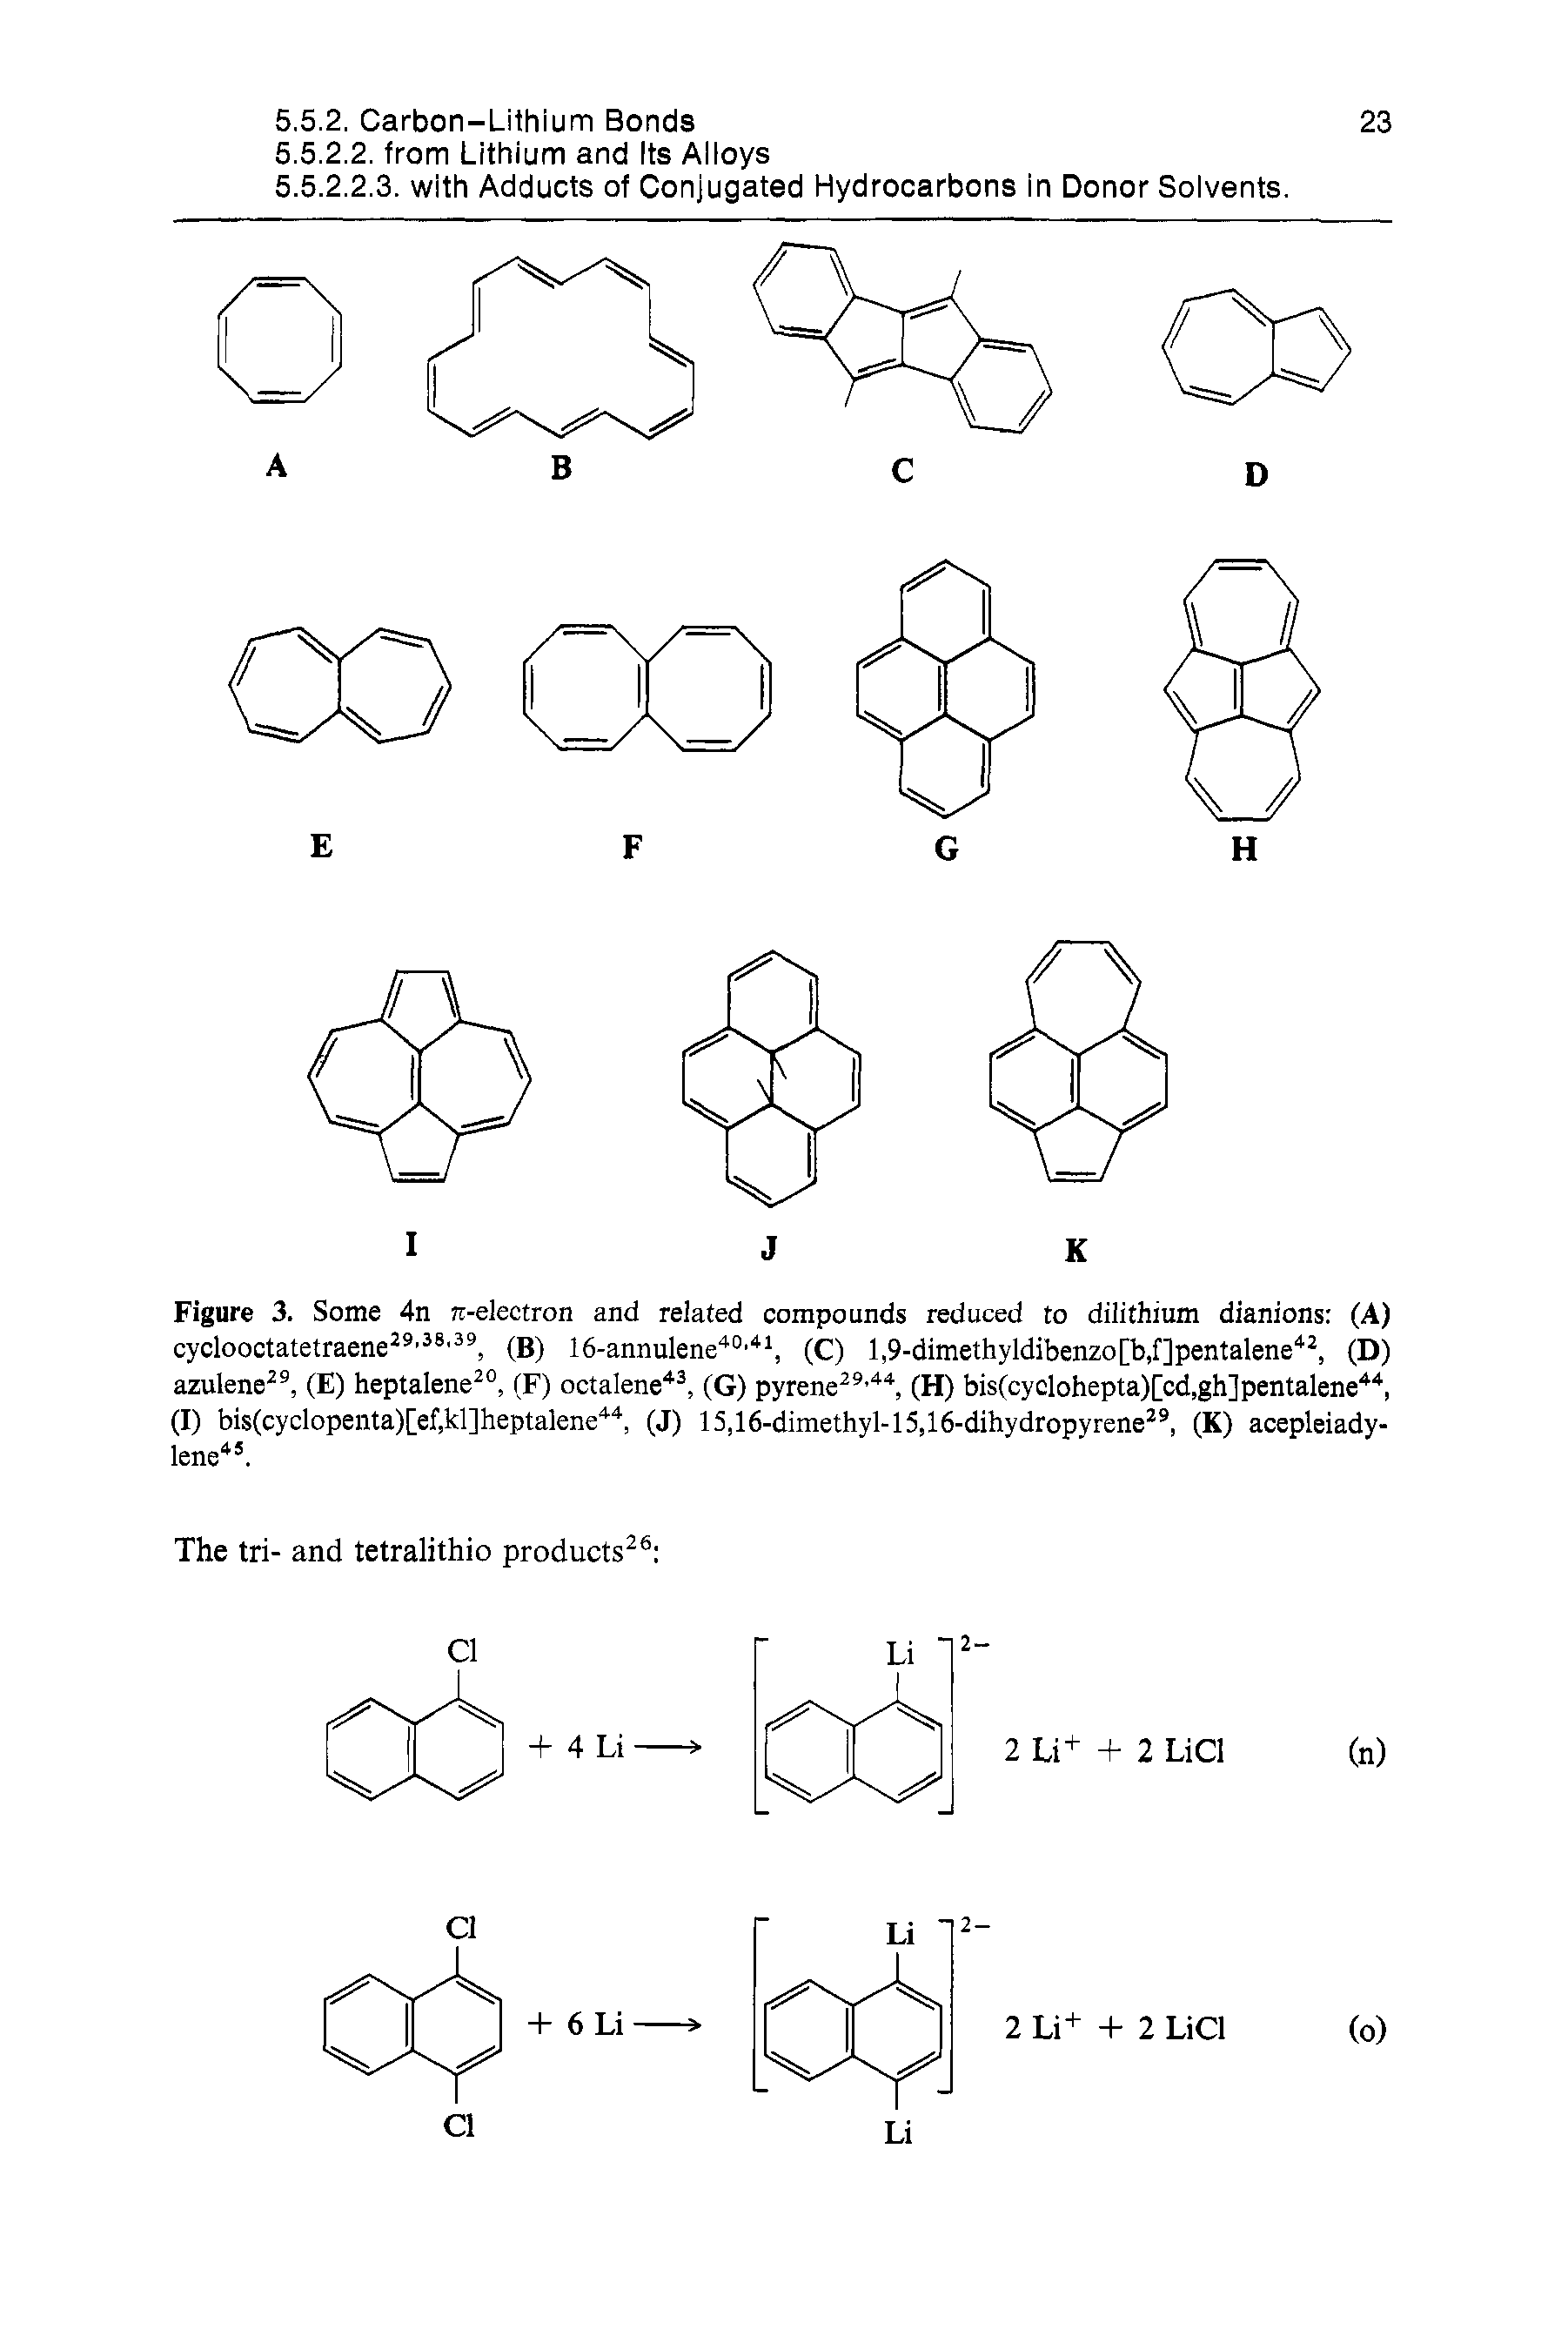 Figure 3. Some 4n 7r-electron and related compounds reduced to dilithium dianions (A) cyeloootatetraene , (B) Ih-annulene" , (C) l,9-dimethyldibenzo[b,f]pentalene , (D) azulene , (E) heptalene °, (F) octalene, (G) pyrene , (H) bis(cyclohepta)[cd,gh]pentalene, (I) bis(cyclopenta)[ef,kl]heptalene . (J) 15,16-dimethyl-15,16-dihydropyrene , (K) acepleiady-lene .